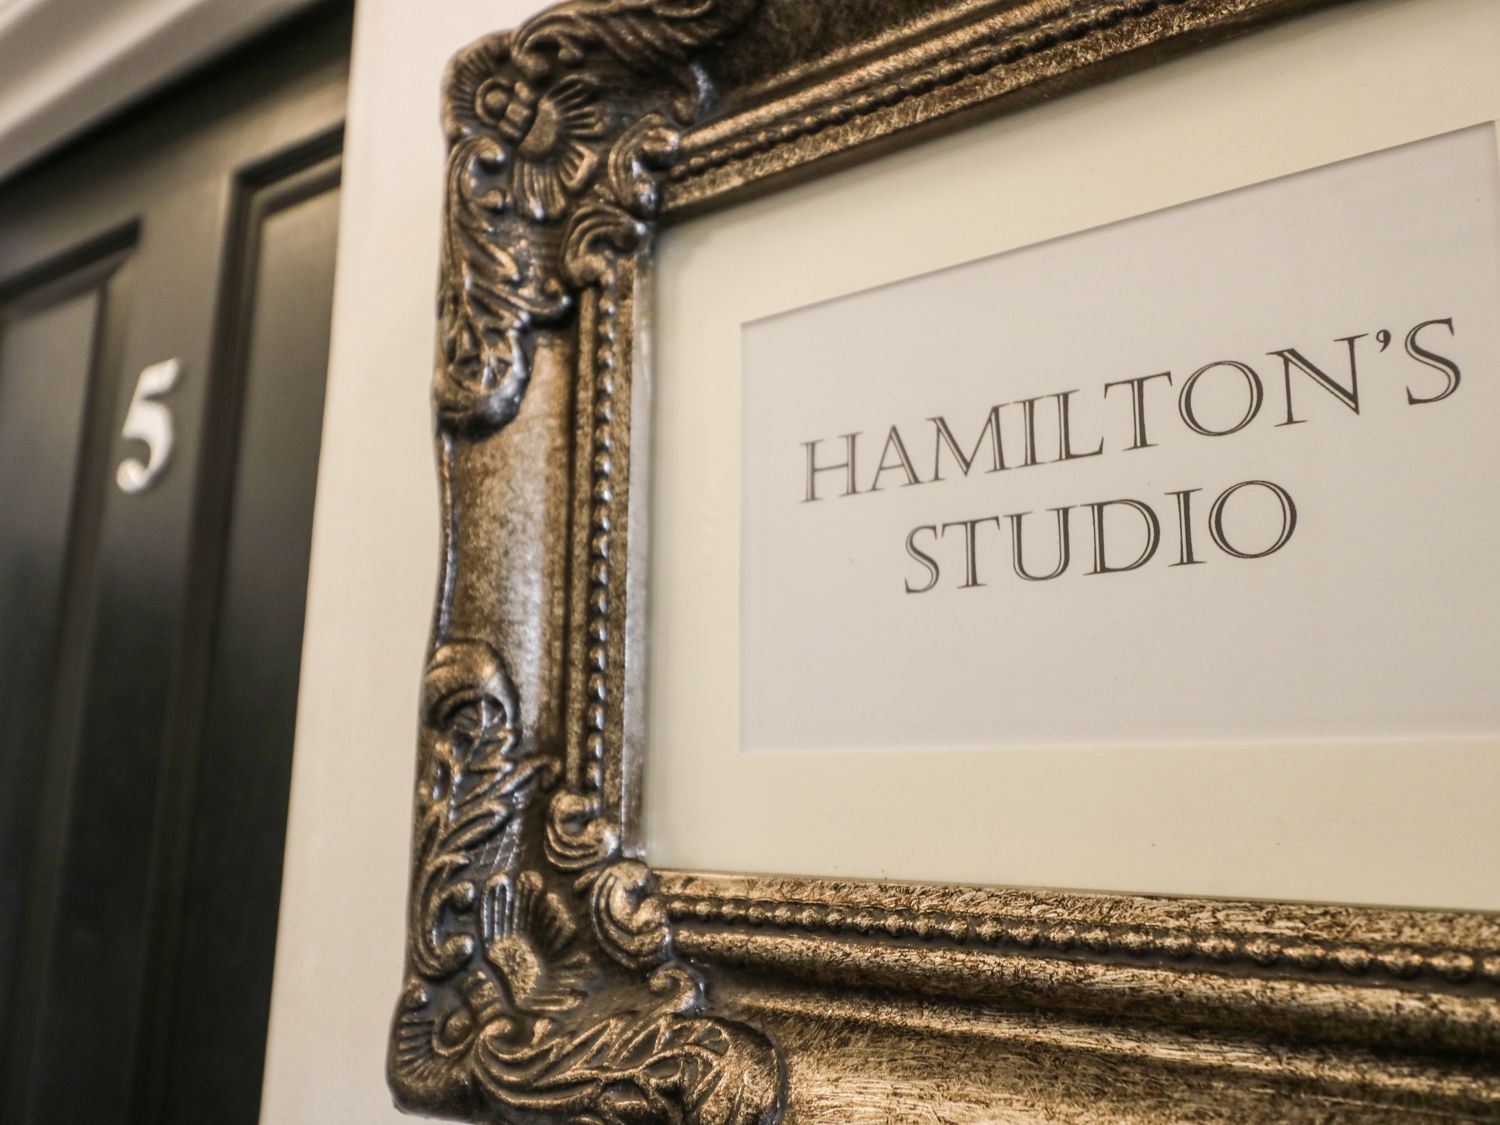 Hamilton's Studio, Isle of Wight